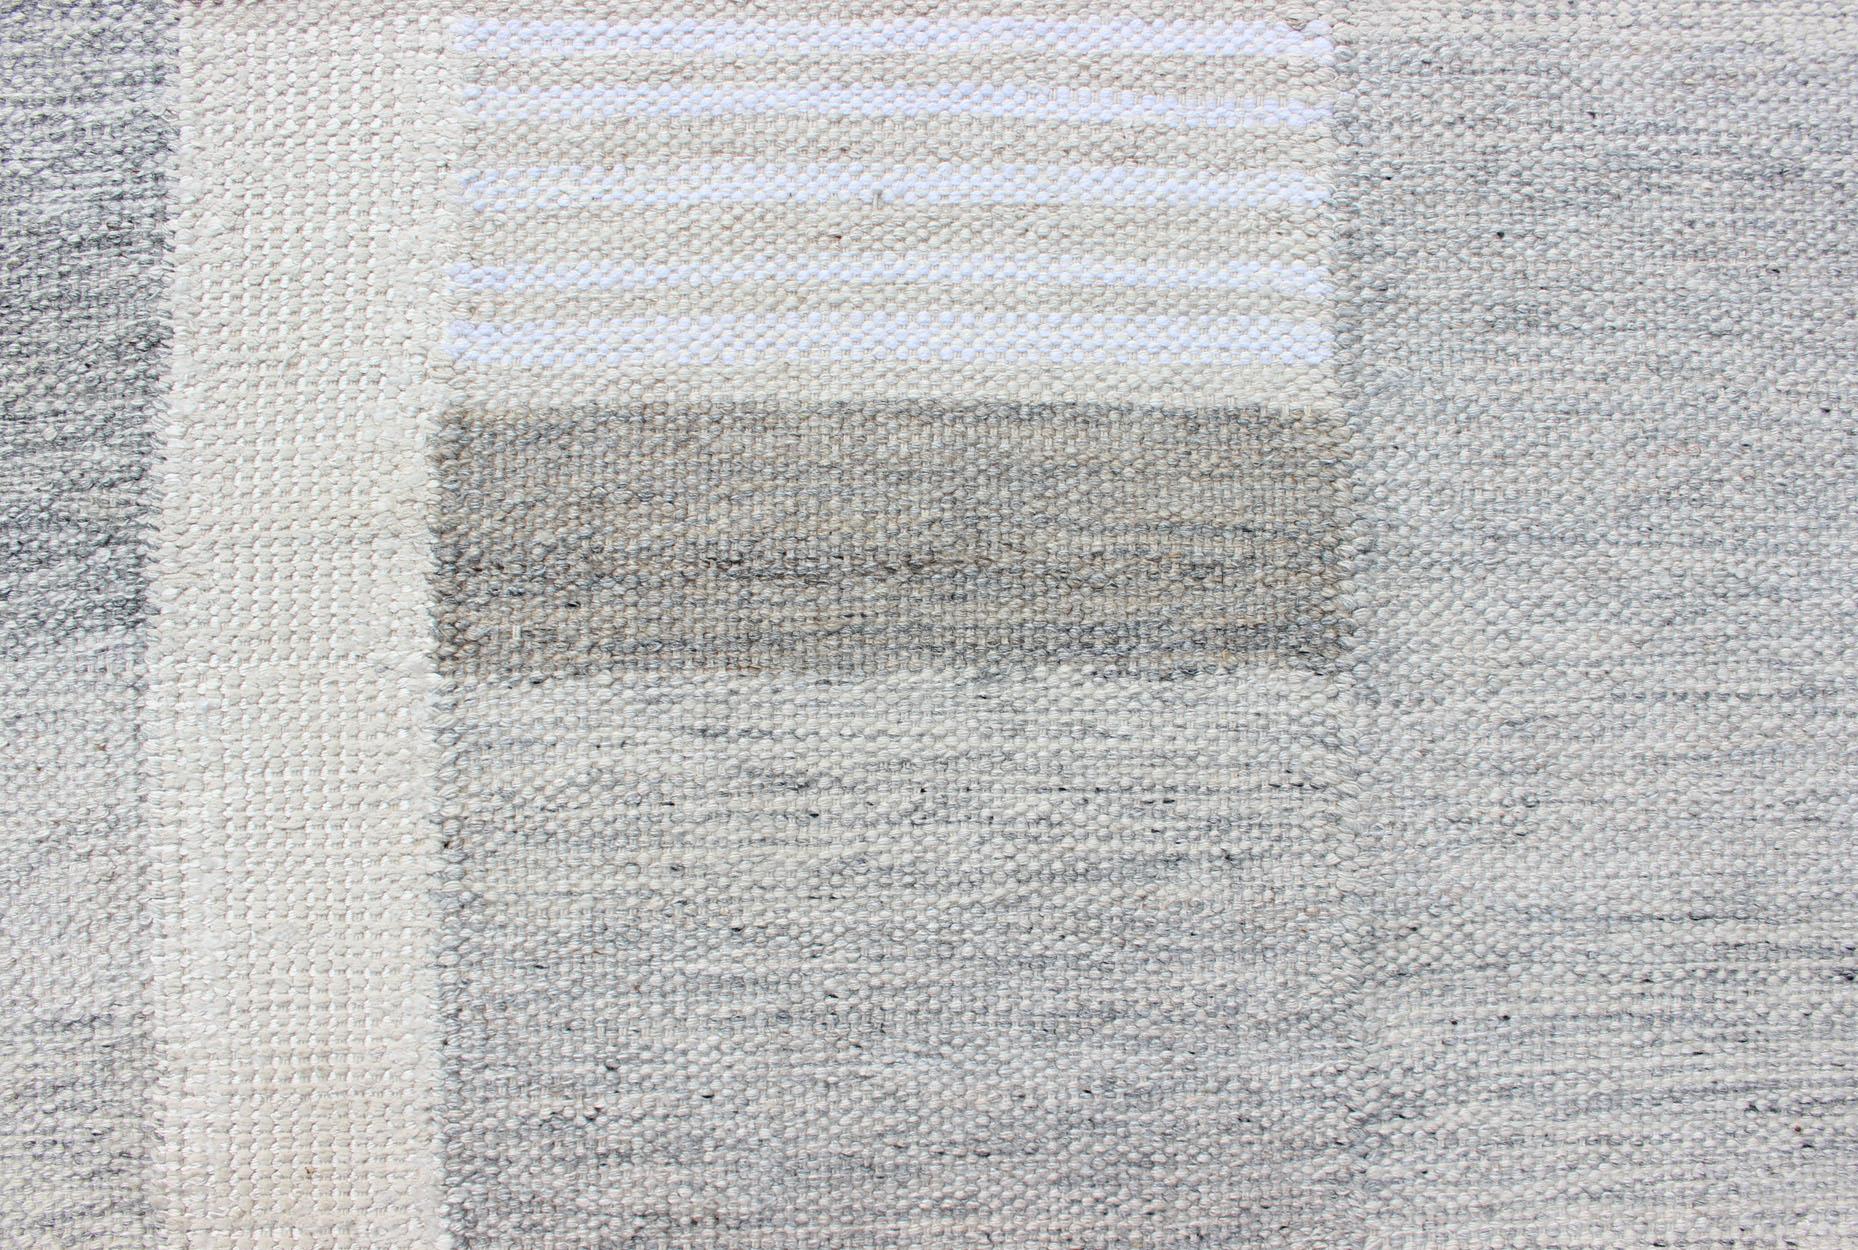 Modern Scandinavian Flat-Weave Rug Design in Gray, beige, Creams & White Tones For Sale 6